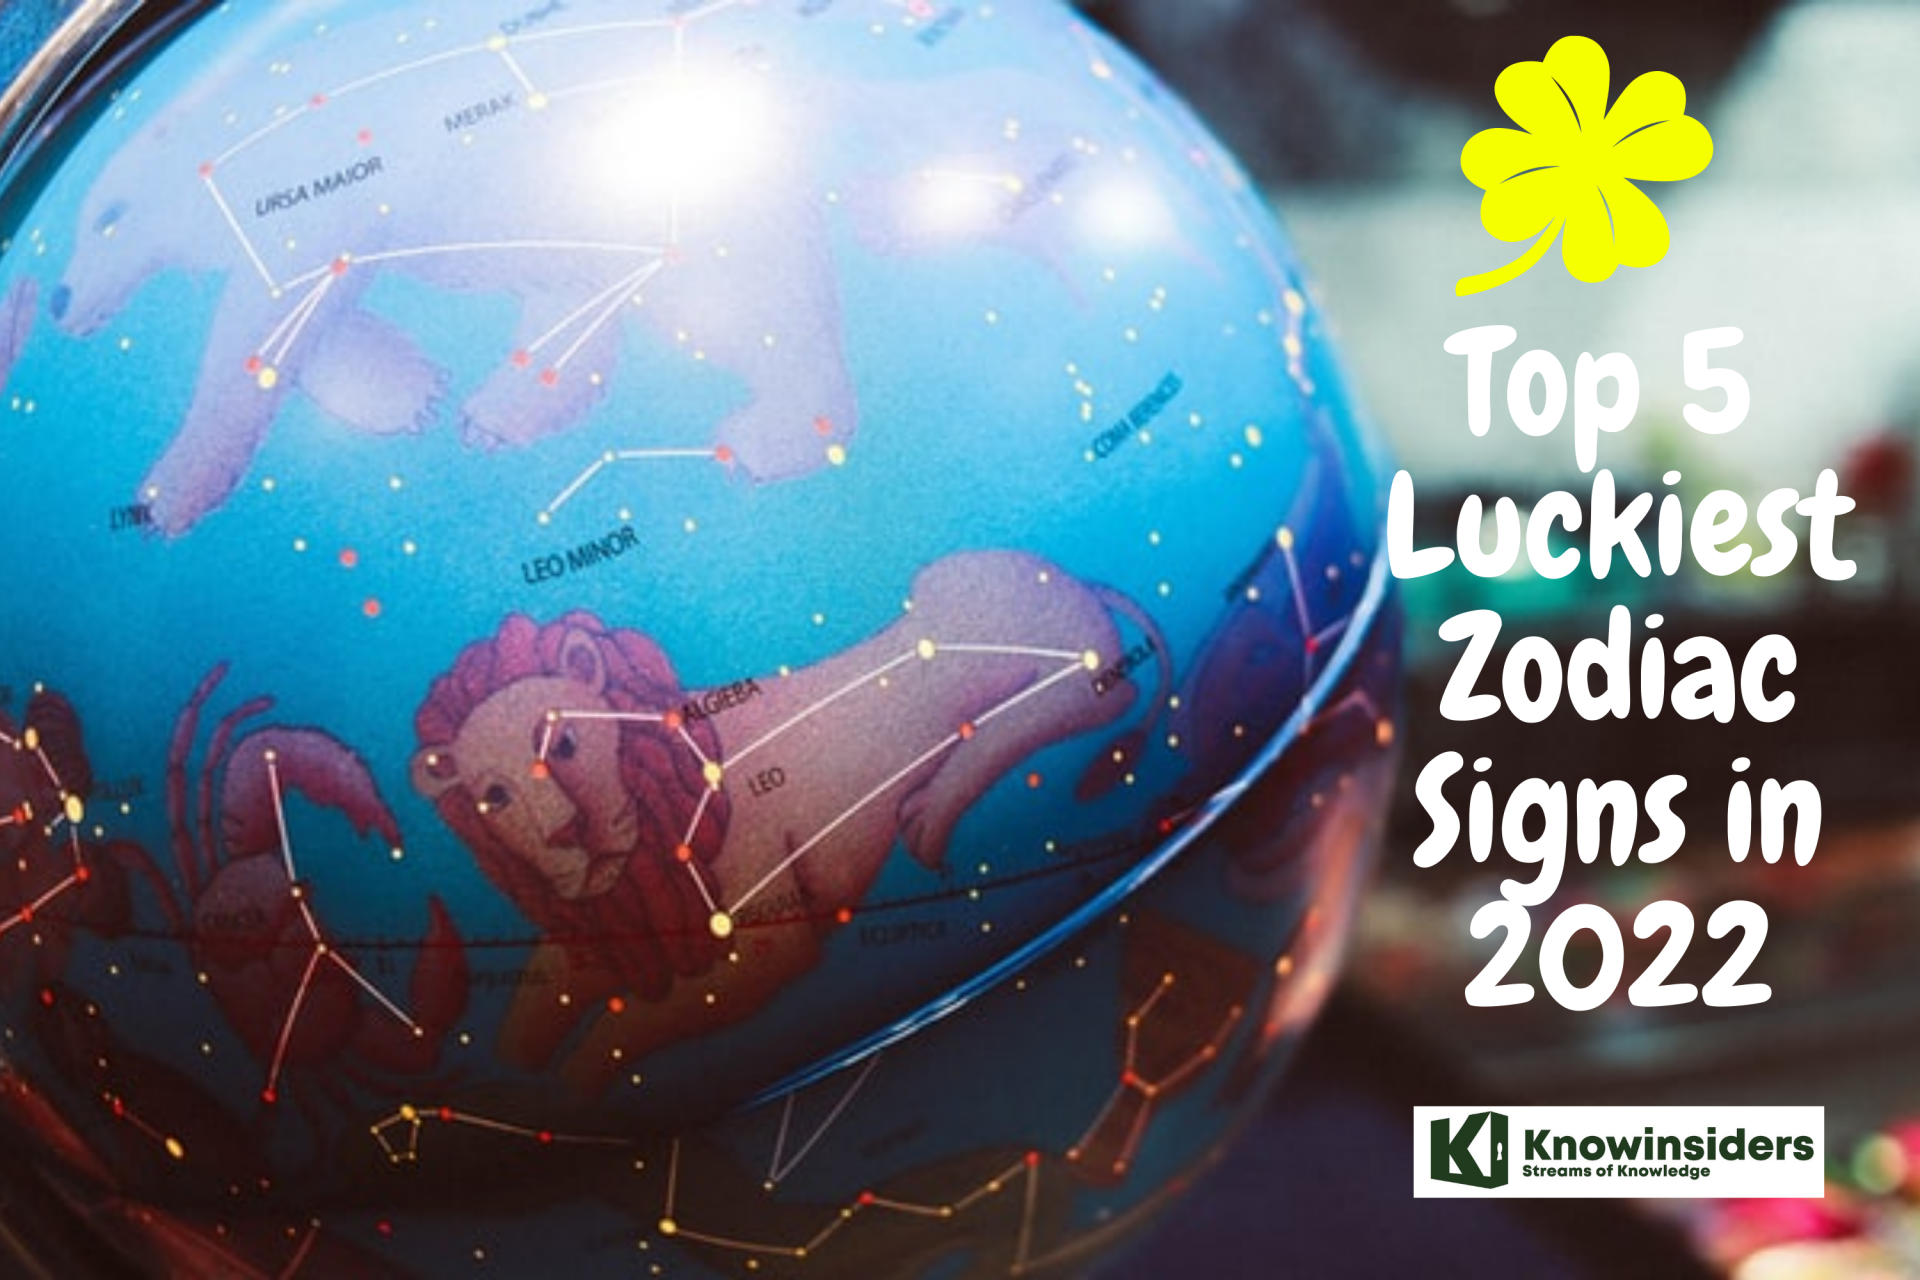 Top 5 Luckiest Zodiac Signs in 2022